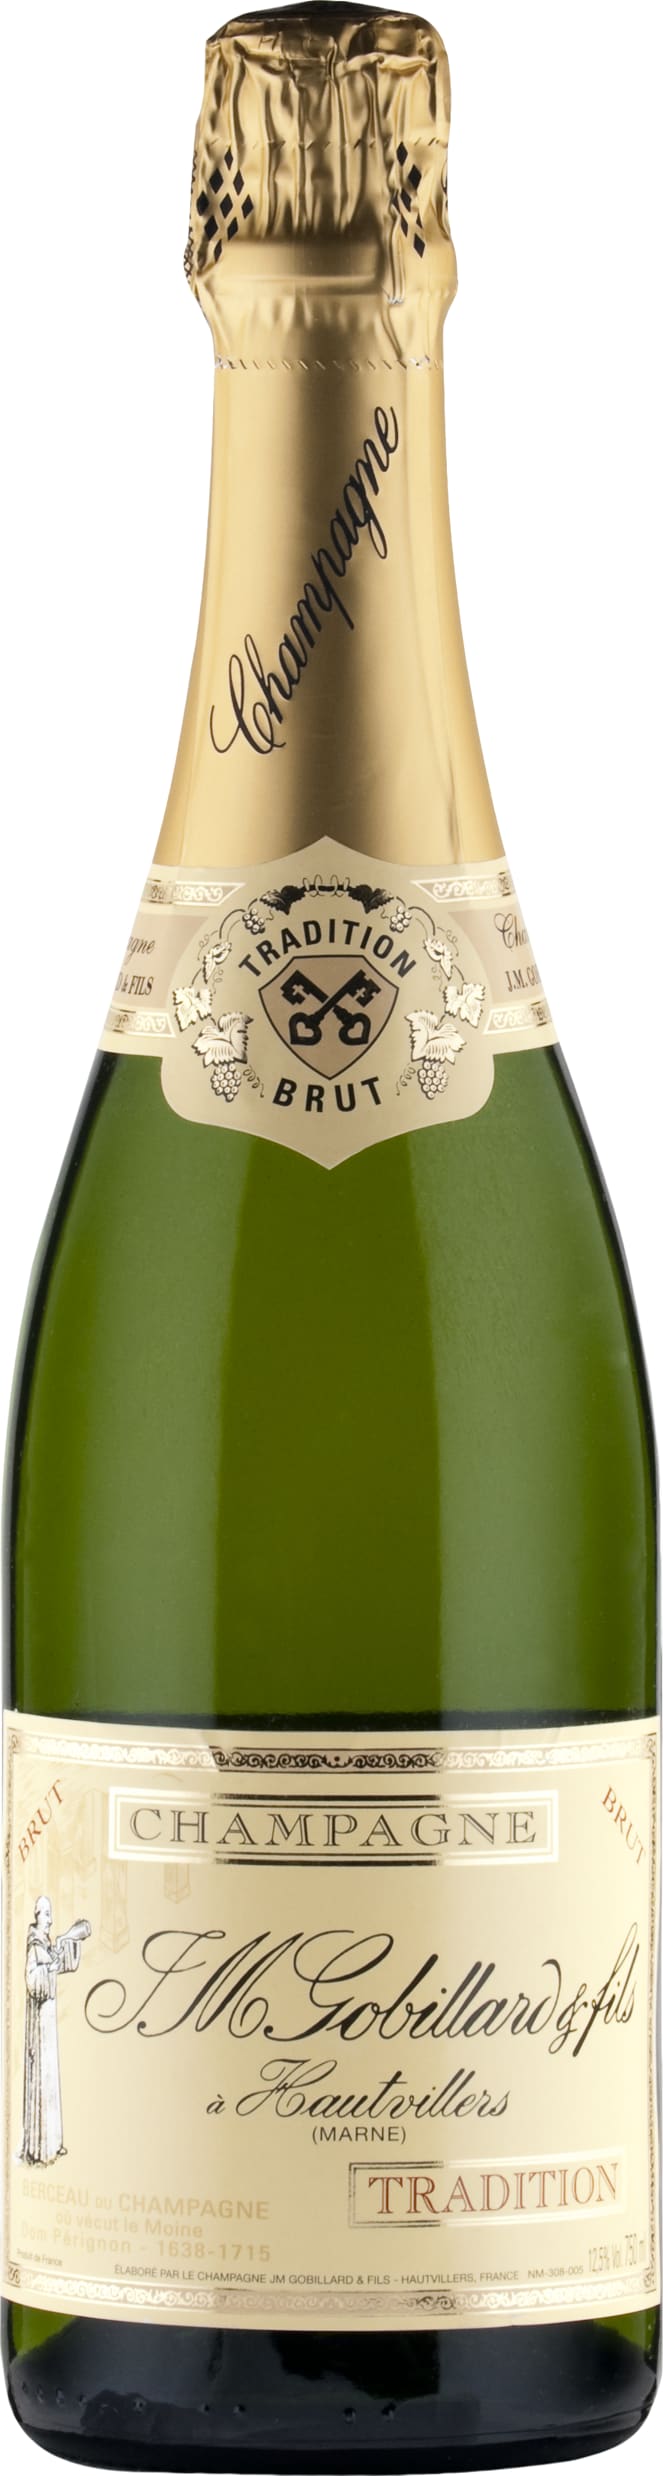 Gobillard Champagne Brut Tradition 75cl NV - Buy Gobillard Wines from GREAT WINES DIRECT wine shop